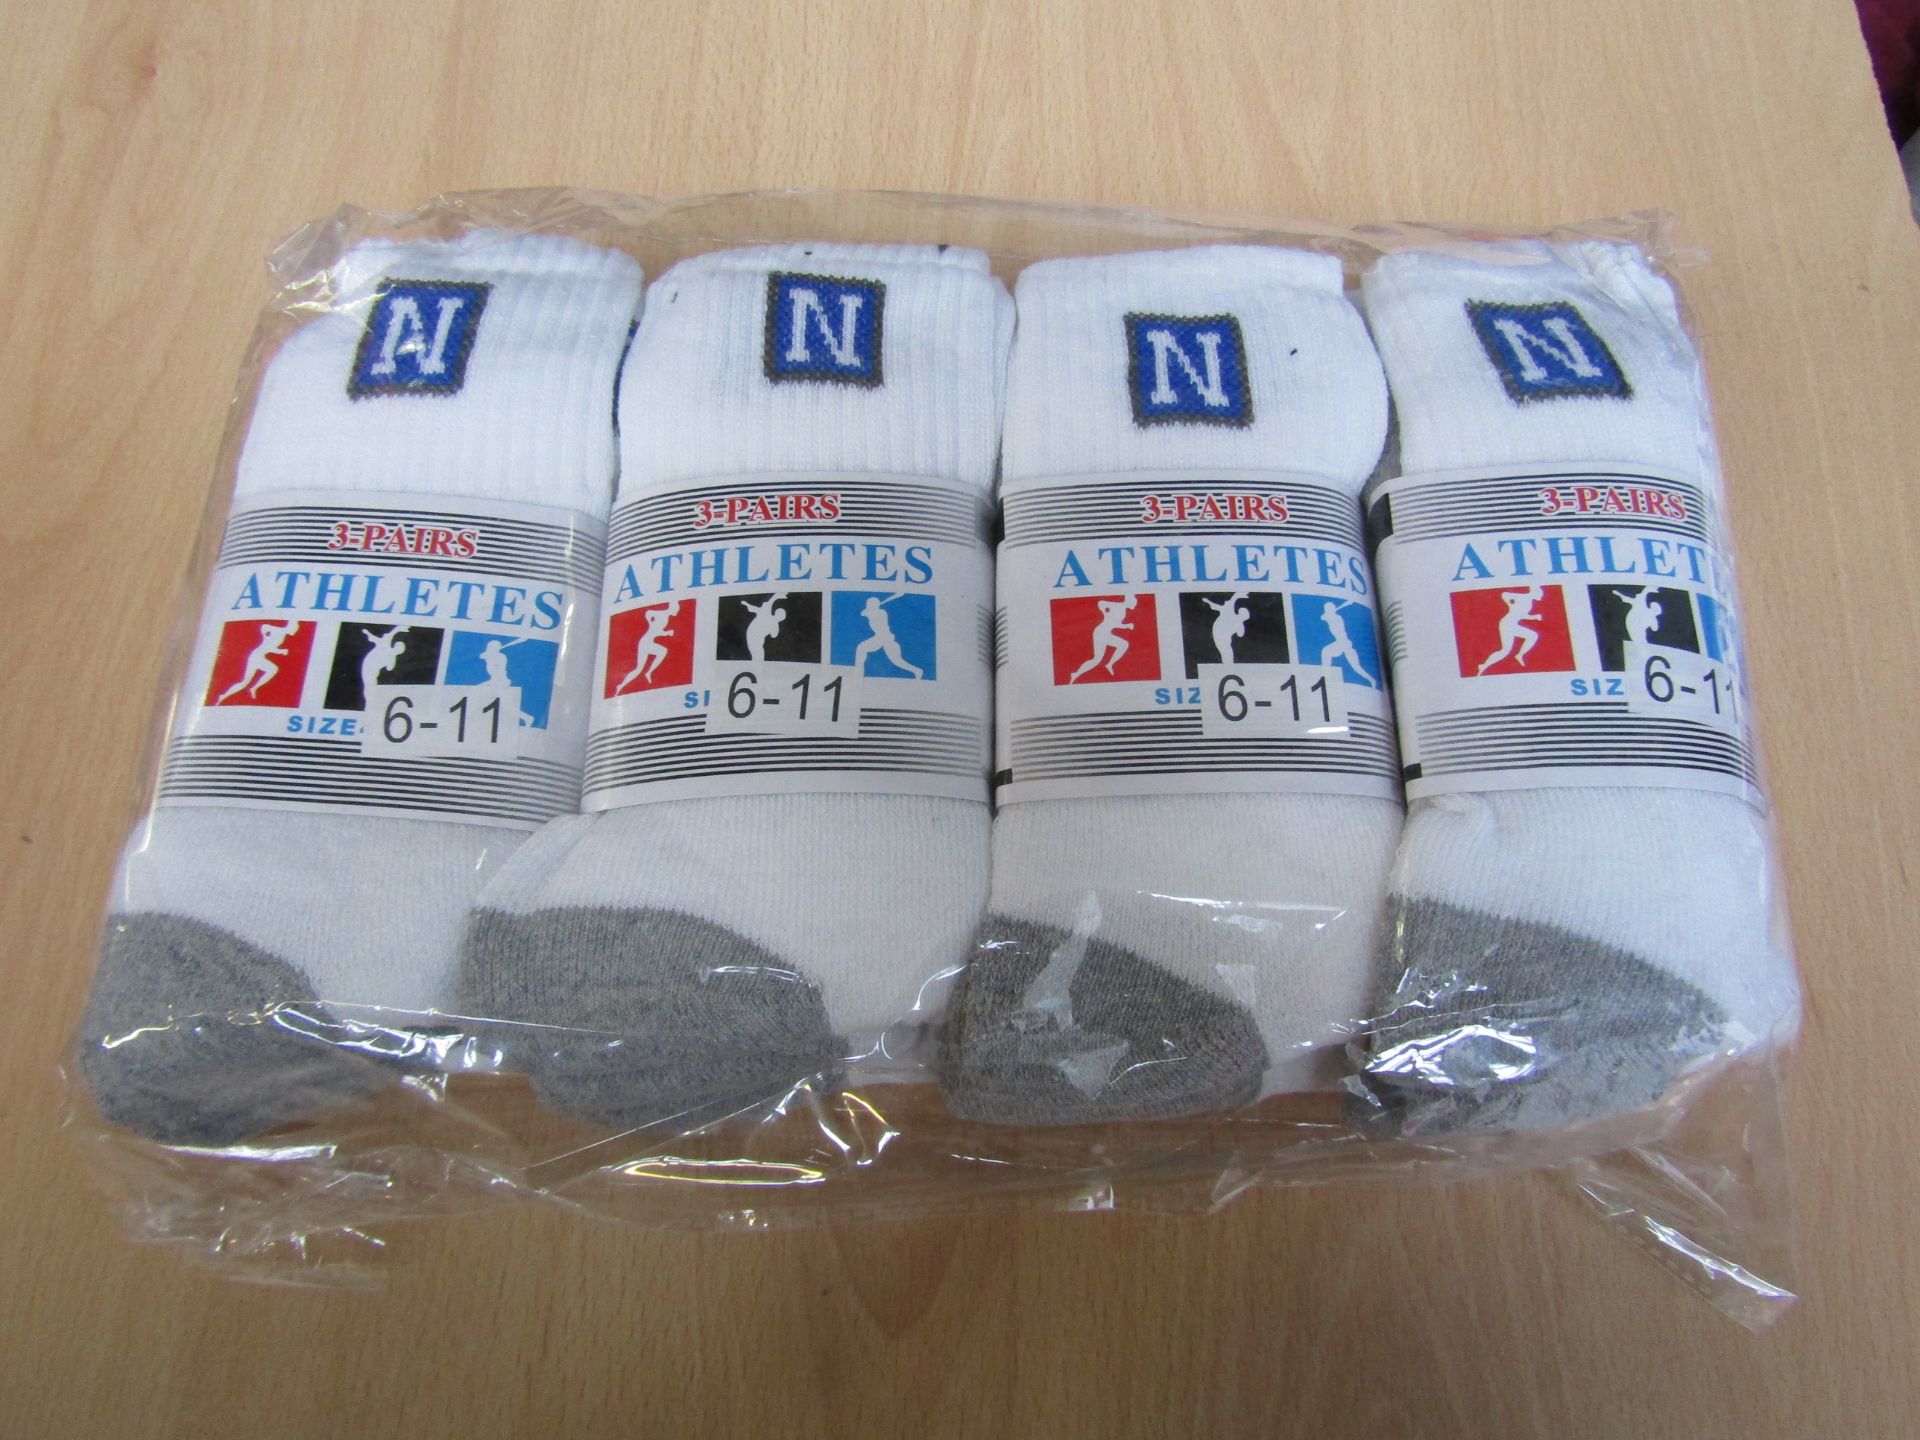 4x Packs of 3 Sports socks size 6-11, new